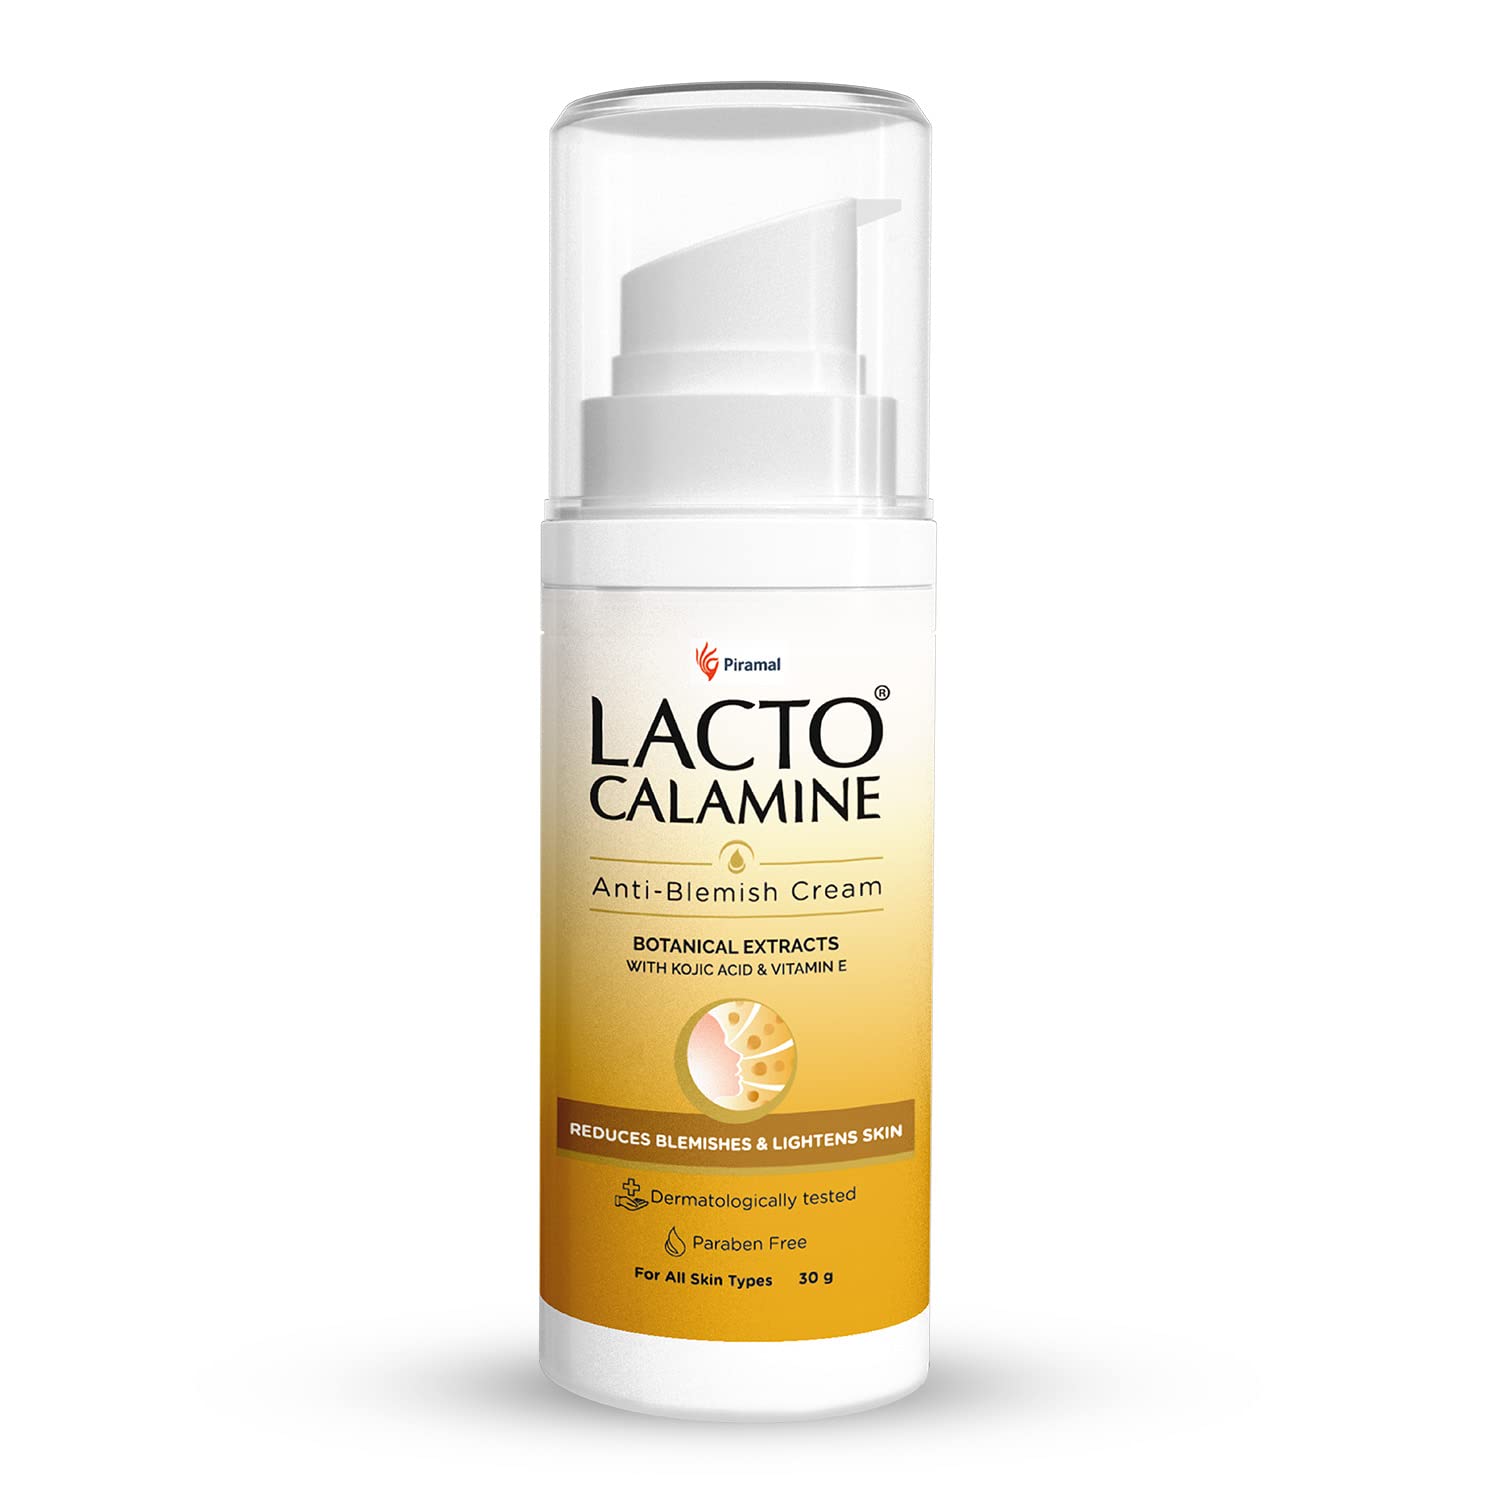 Lacto Calamine Anti Blemish with Botanical extracts, Kojic acid and Vitamin E - 30 g